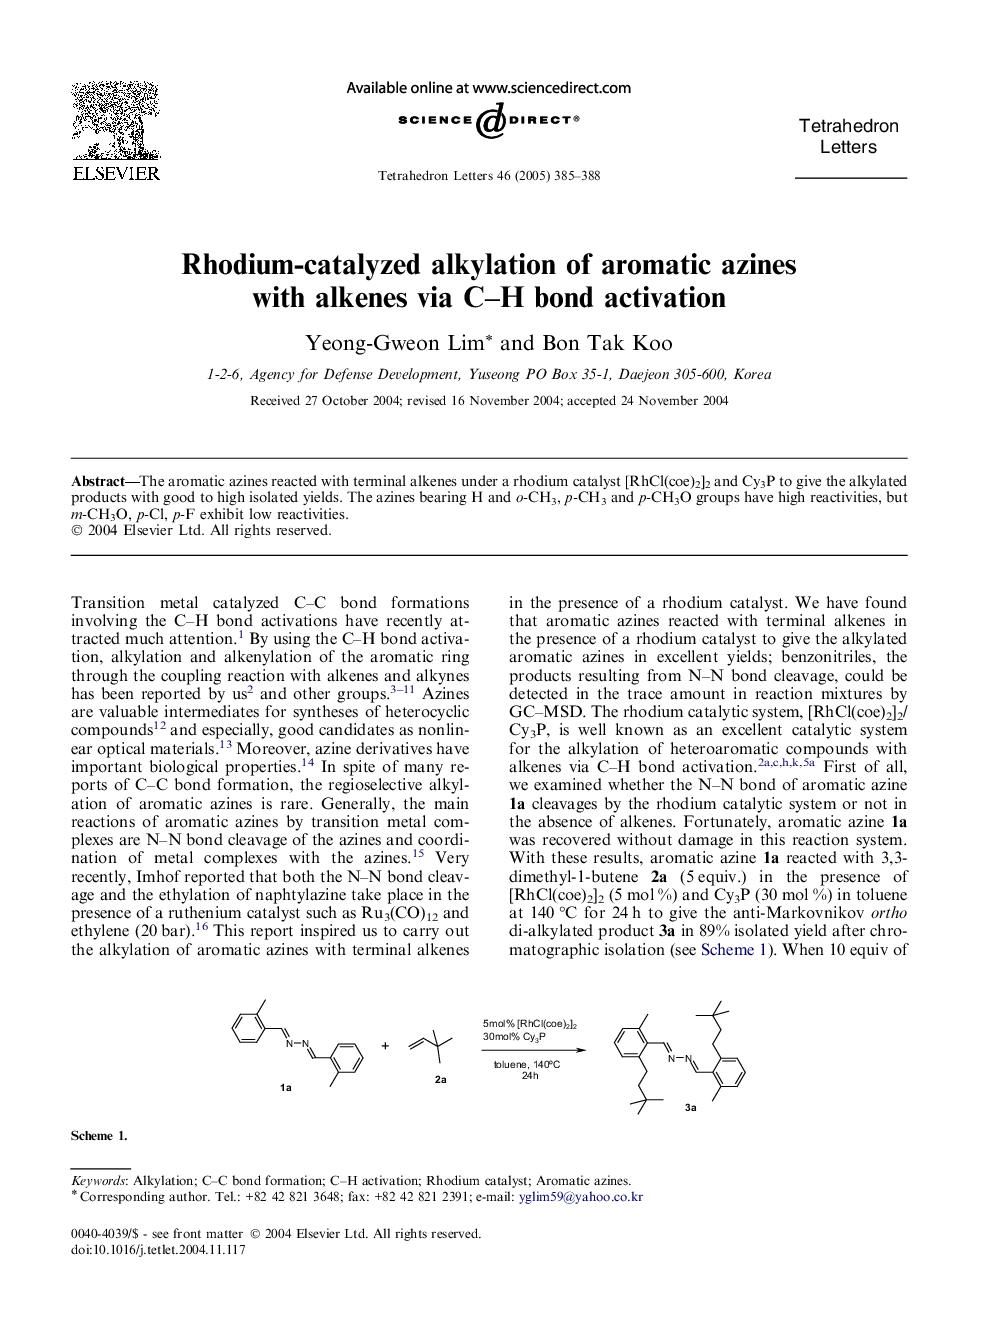 Rhodium-catalyzed alkylation of aromatic azines with alkenes via C-H bond activation